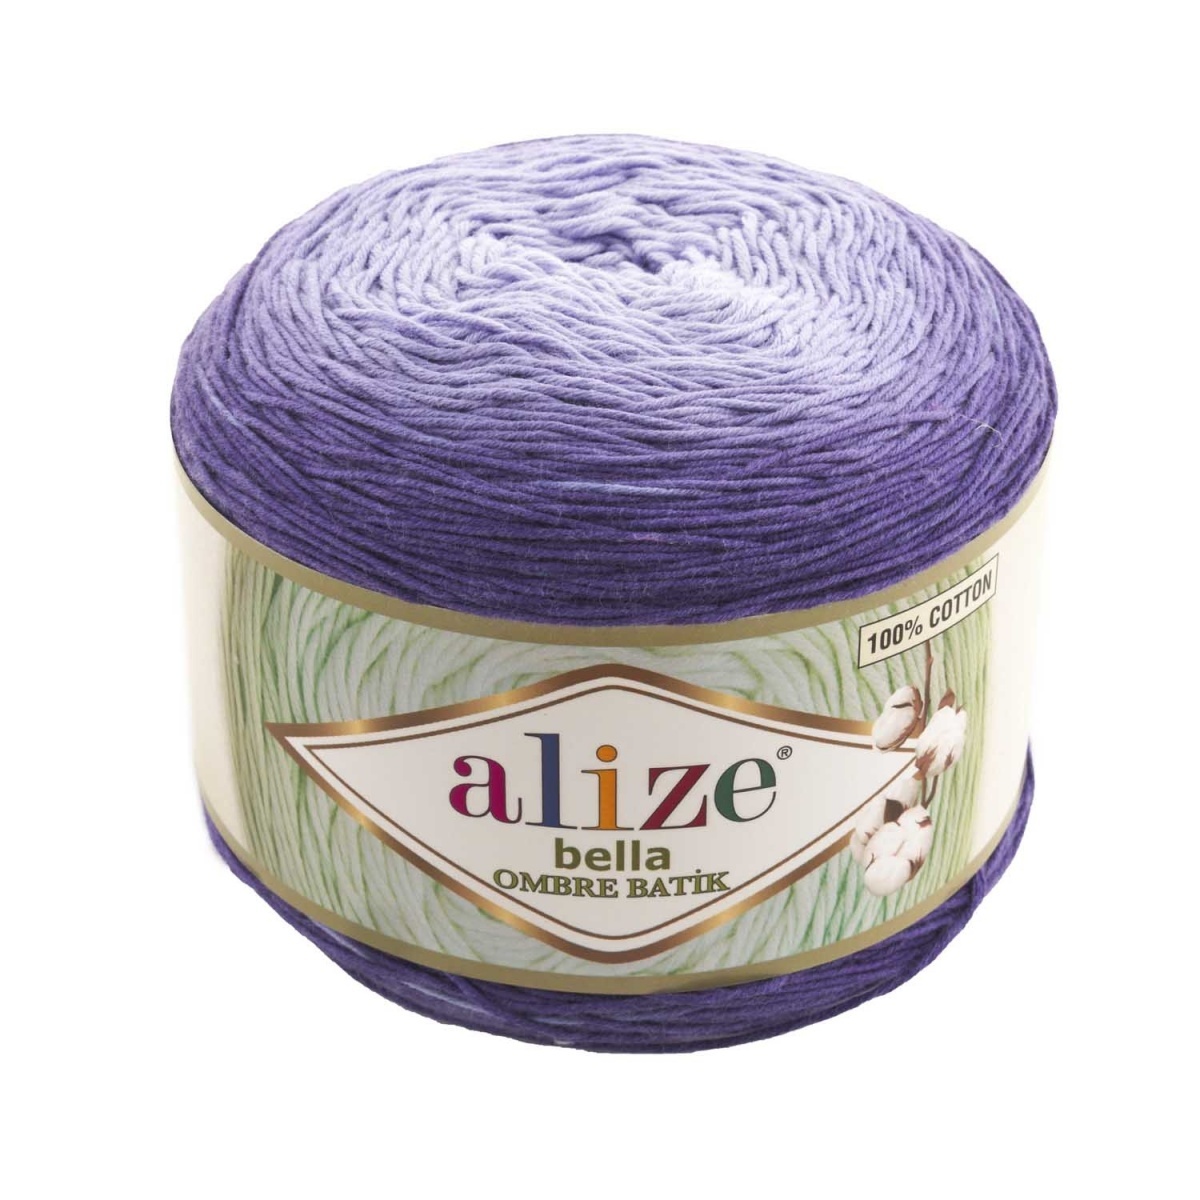 Alize Bella Ombre Batik 100% cotton, 2 Skein Value Pack, 500g фото 1